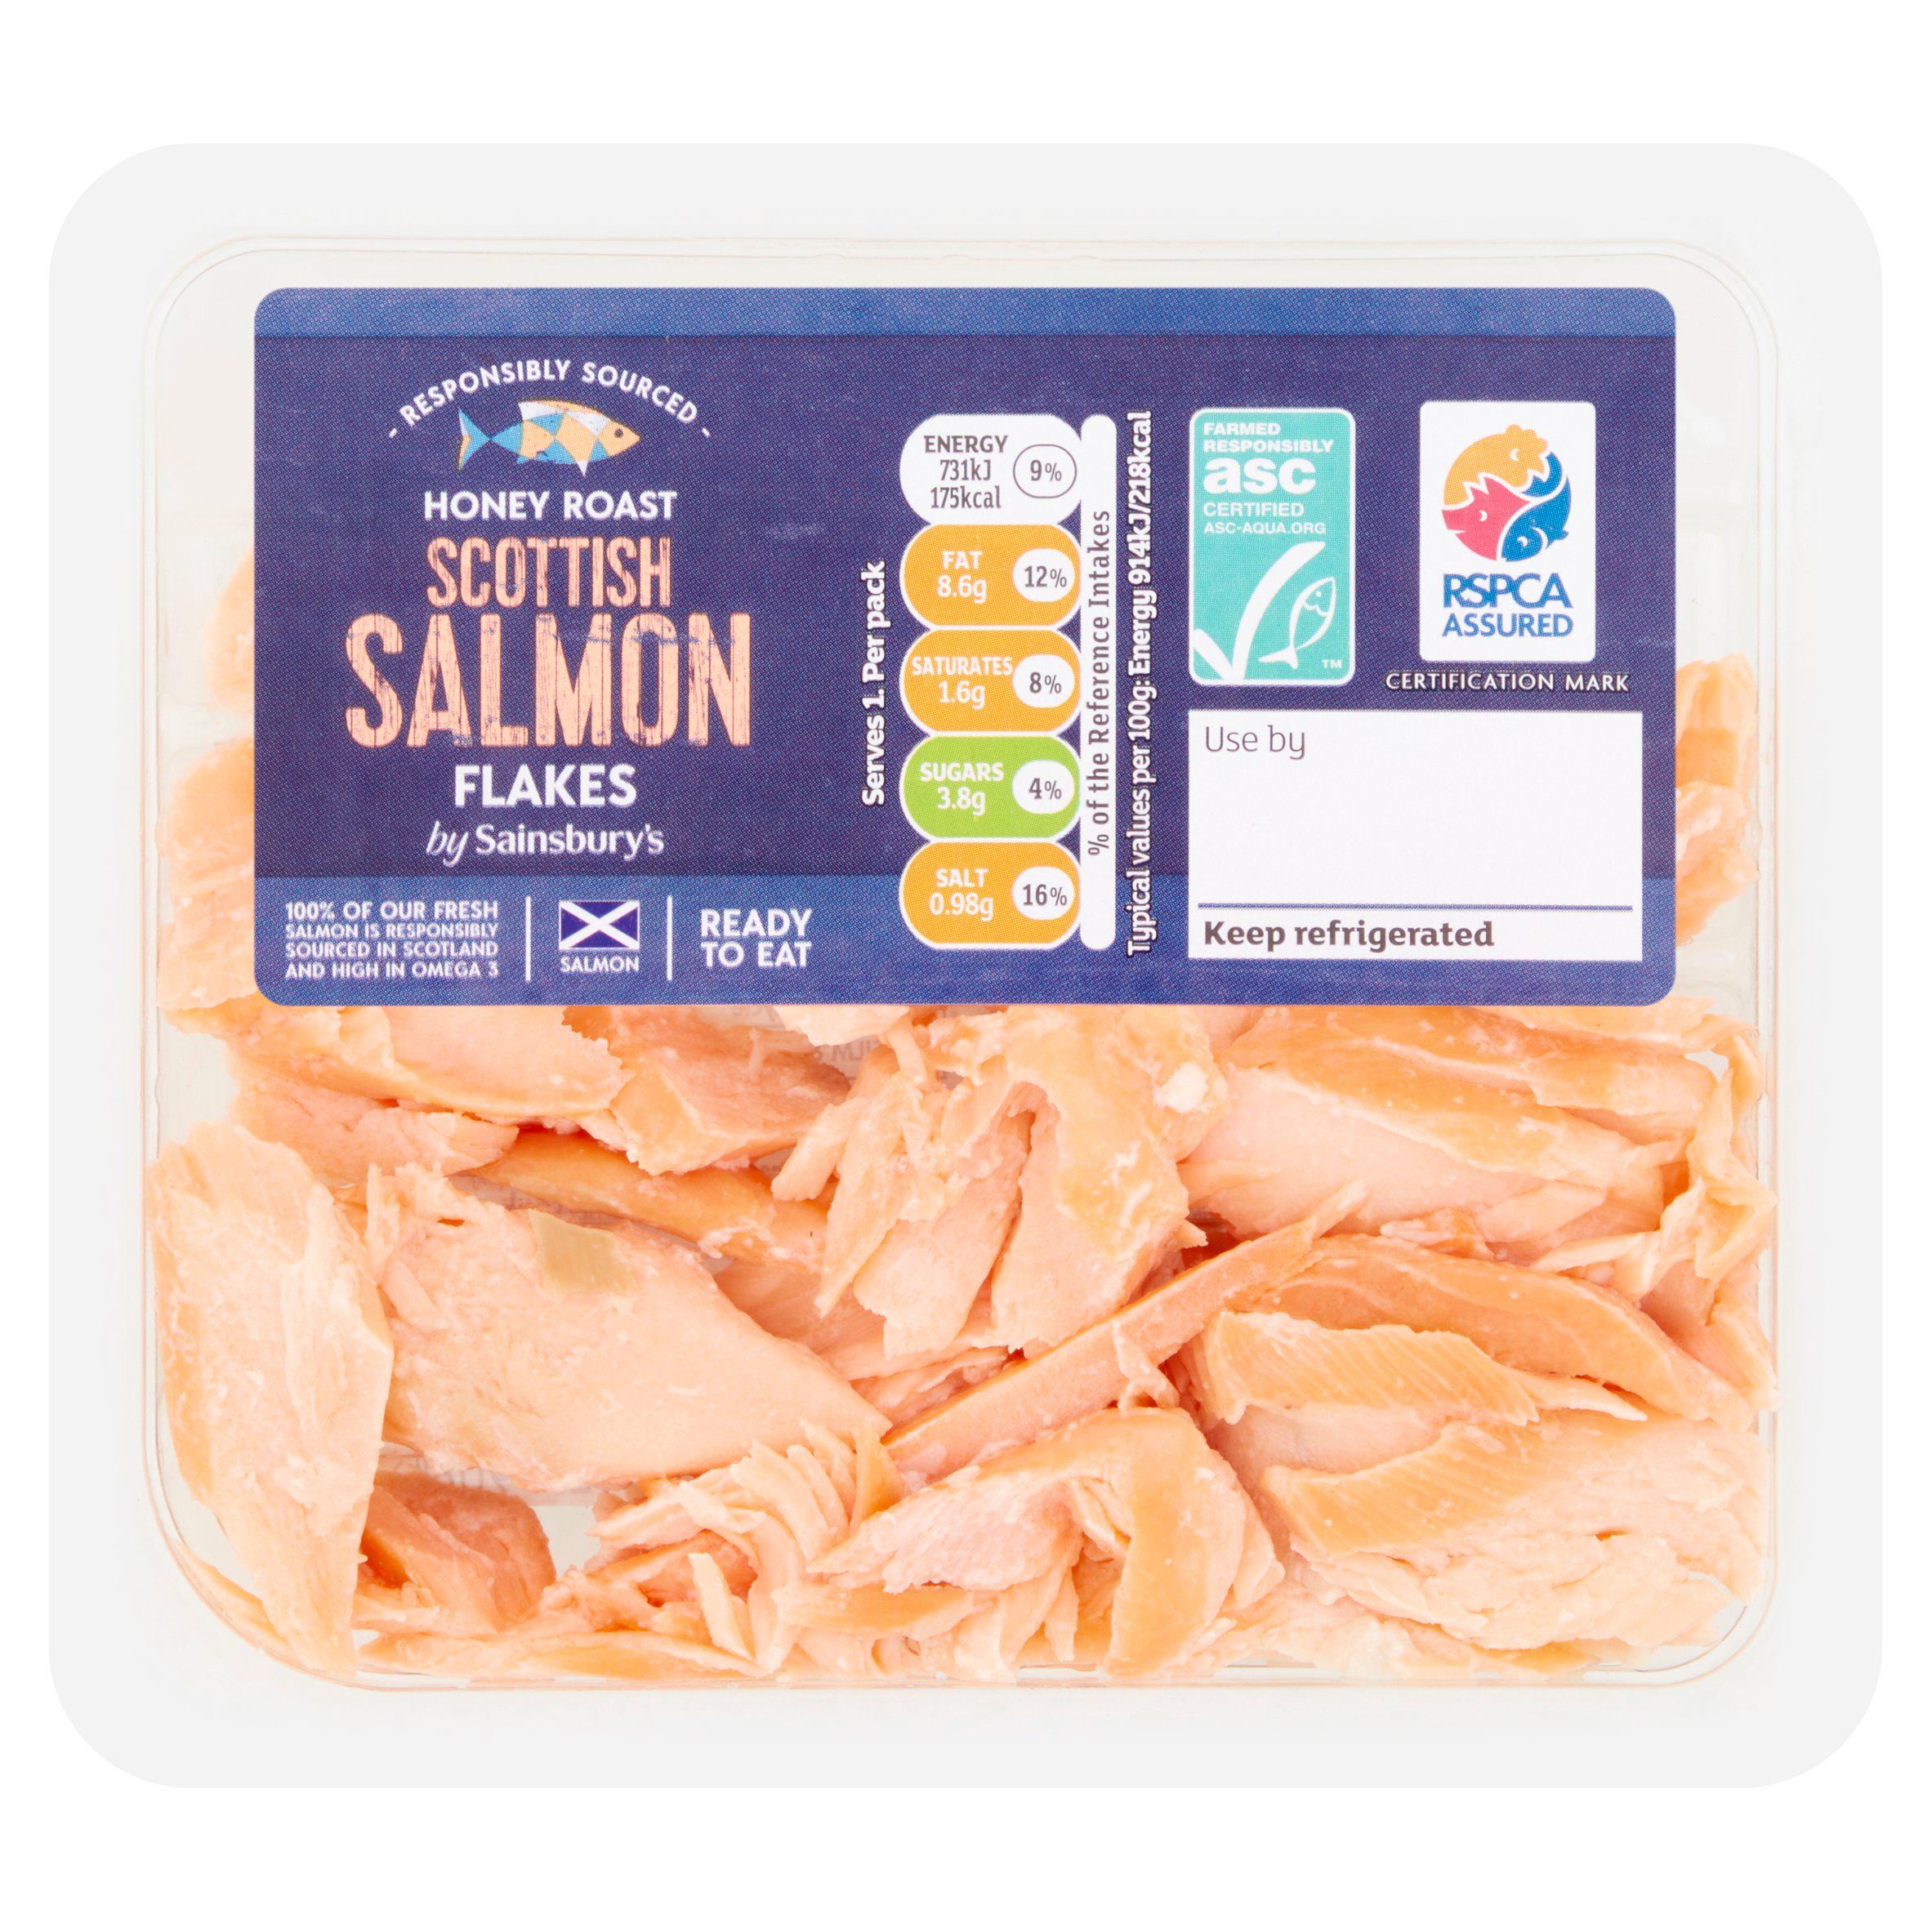 Sainsbury's Honey Roast ASC Scottish Salmon Flakes